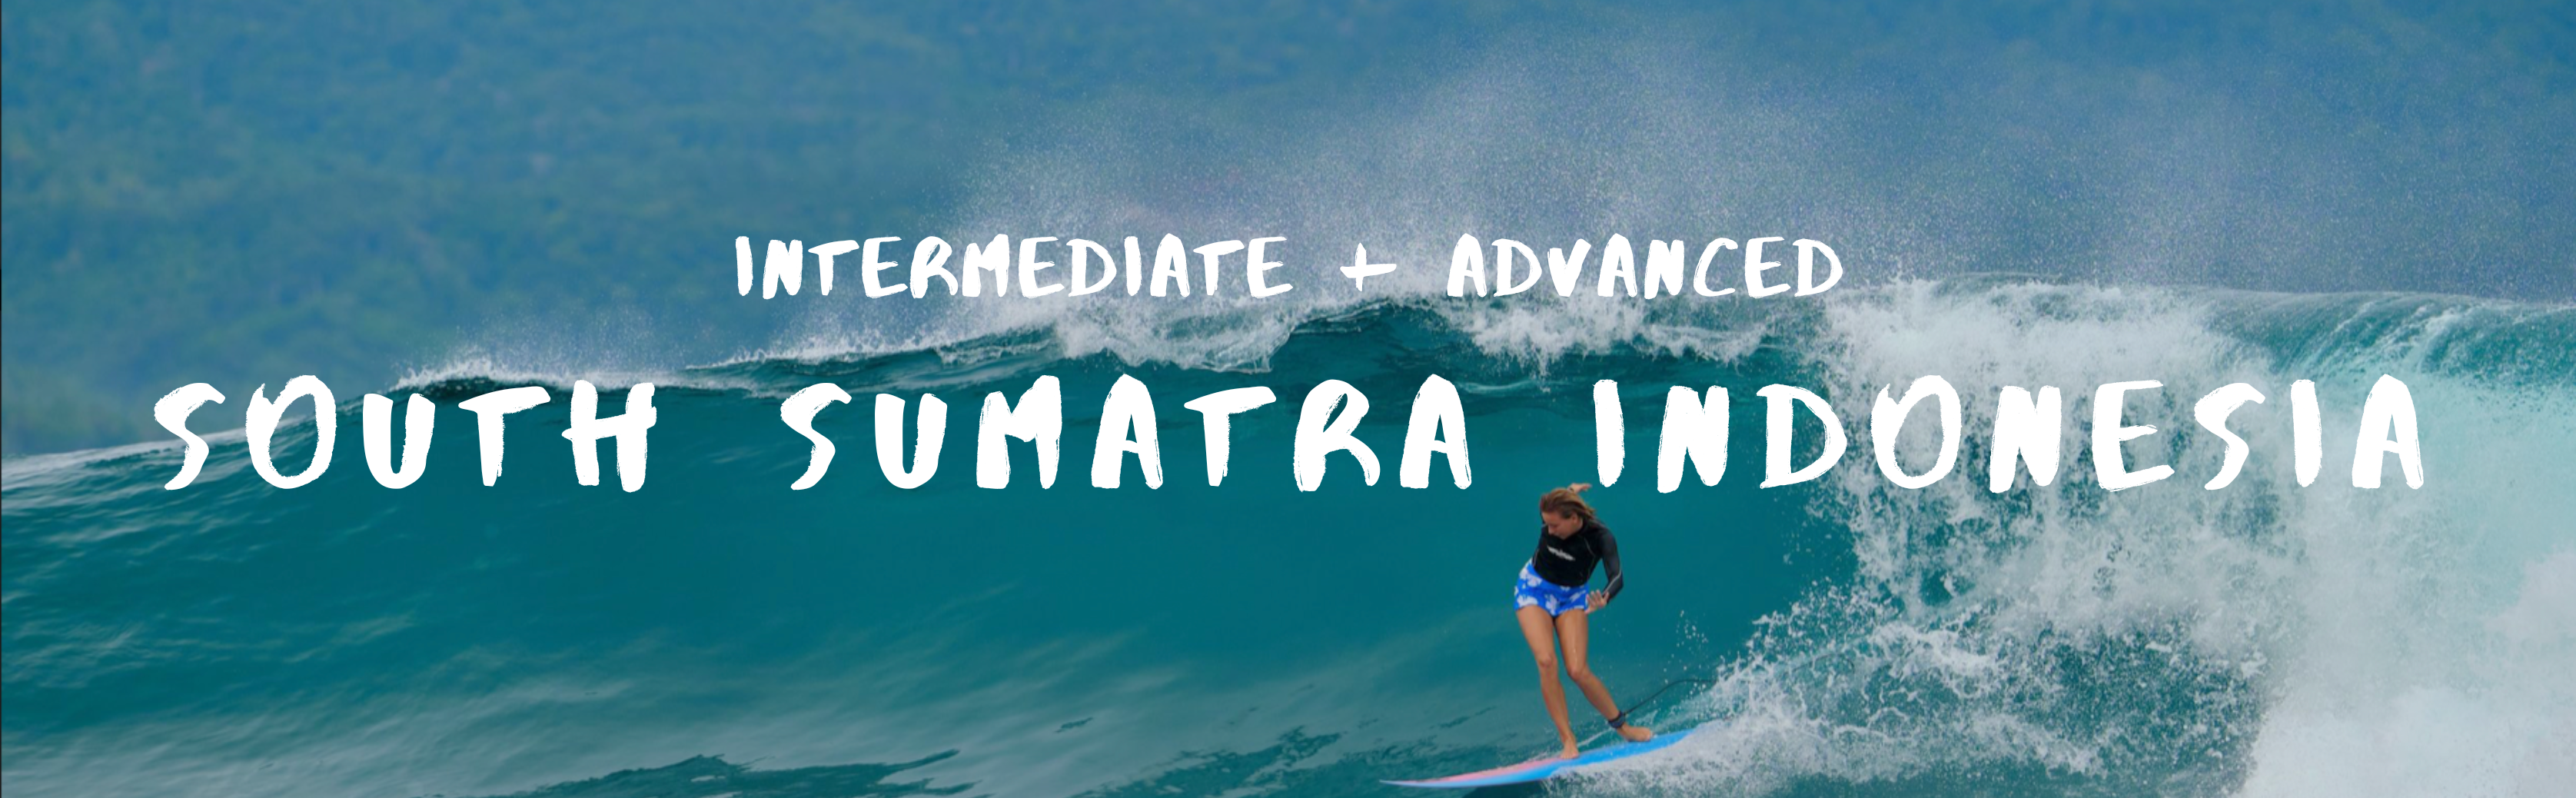 Sumatra Indonesia Surf Retreat